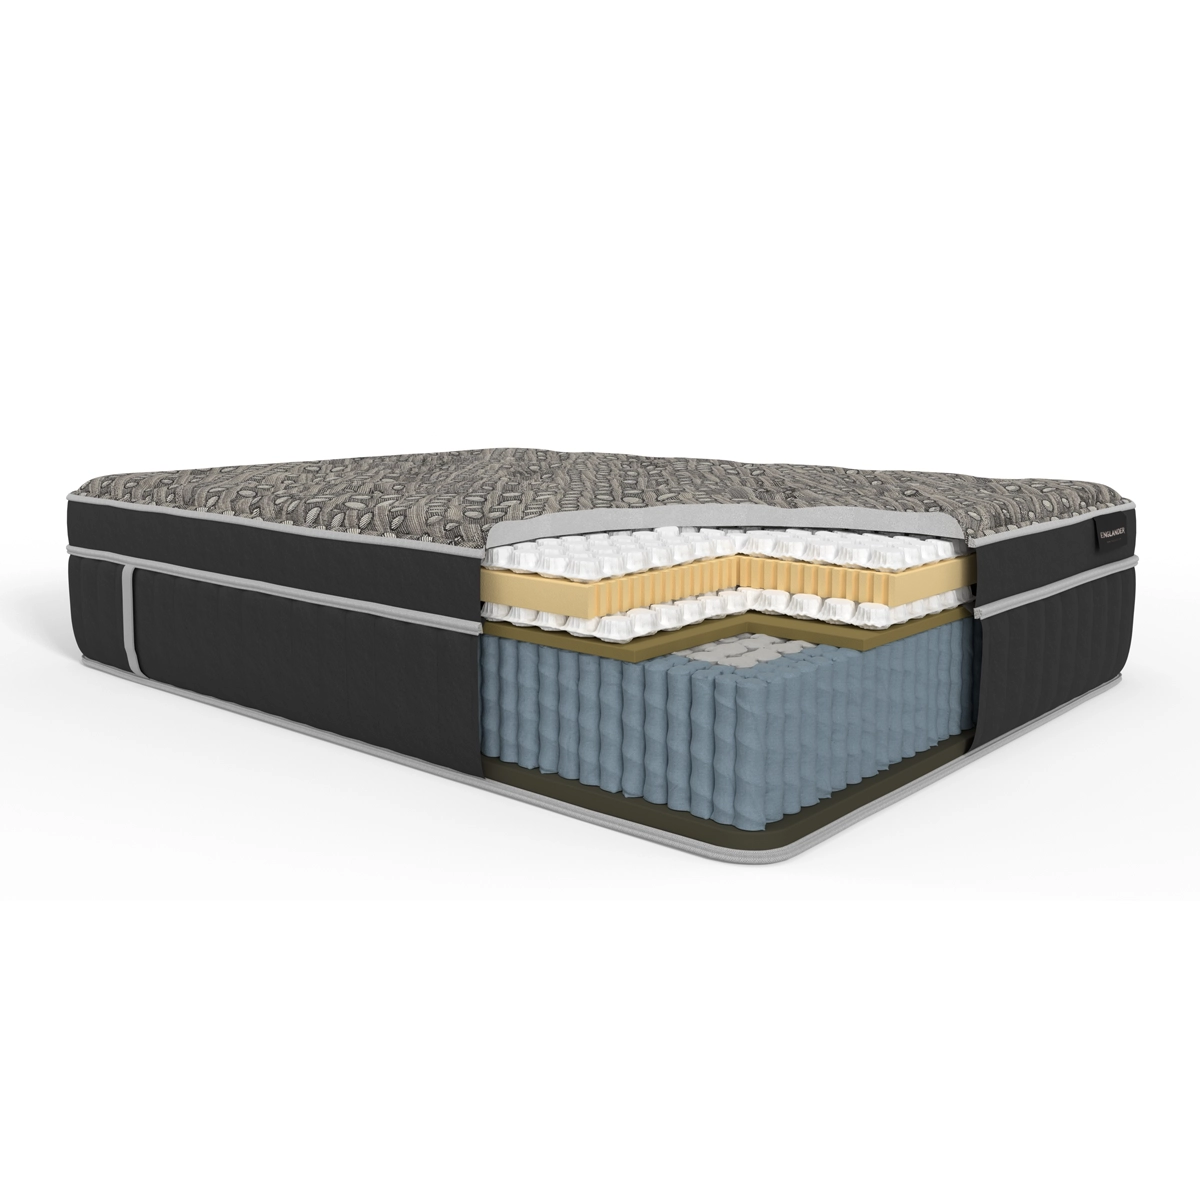 allendaleroyal mattress by englander materials used inside the mattress